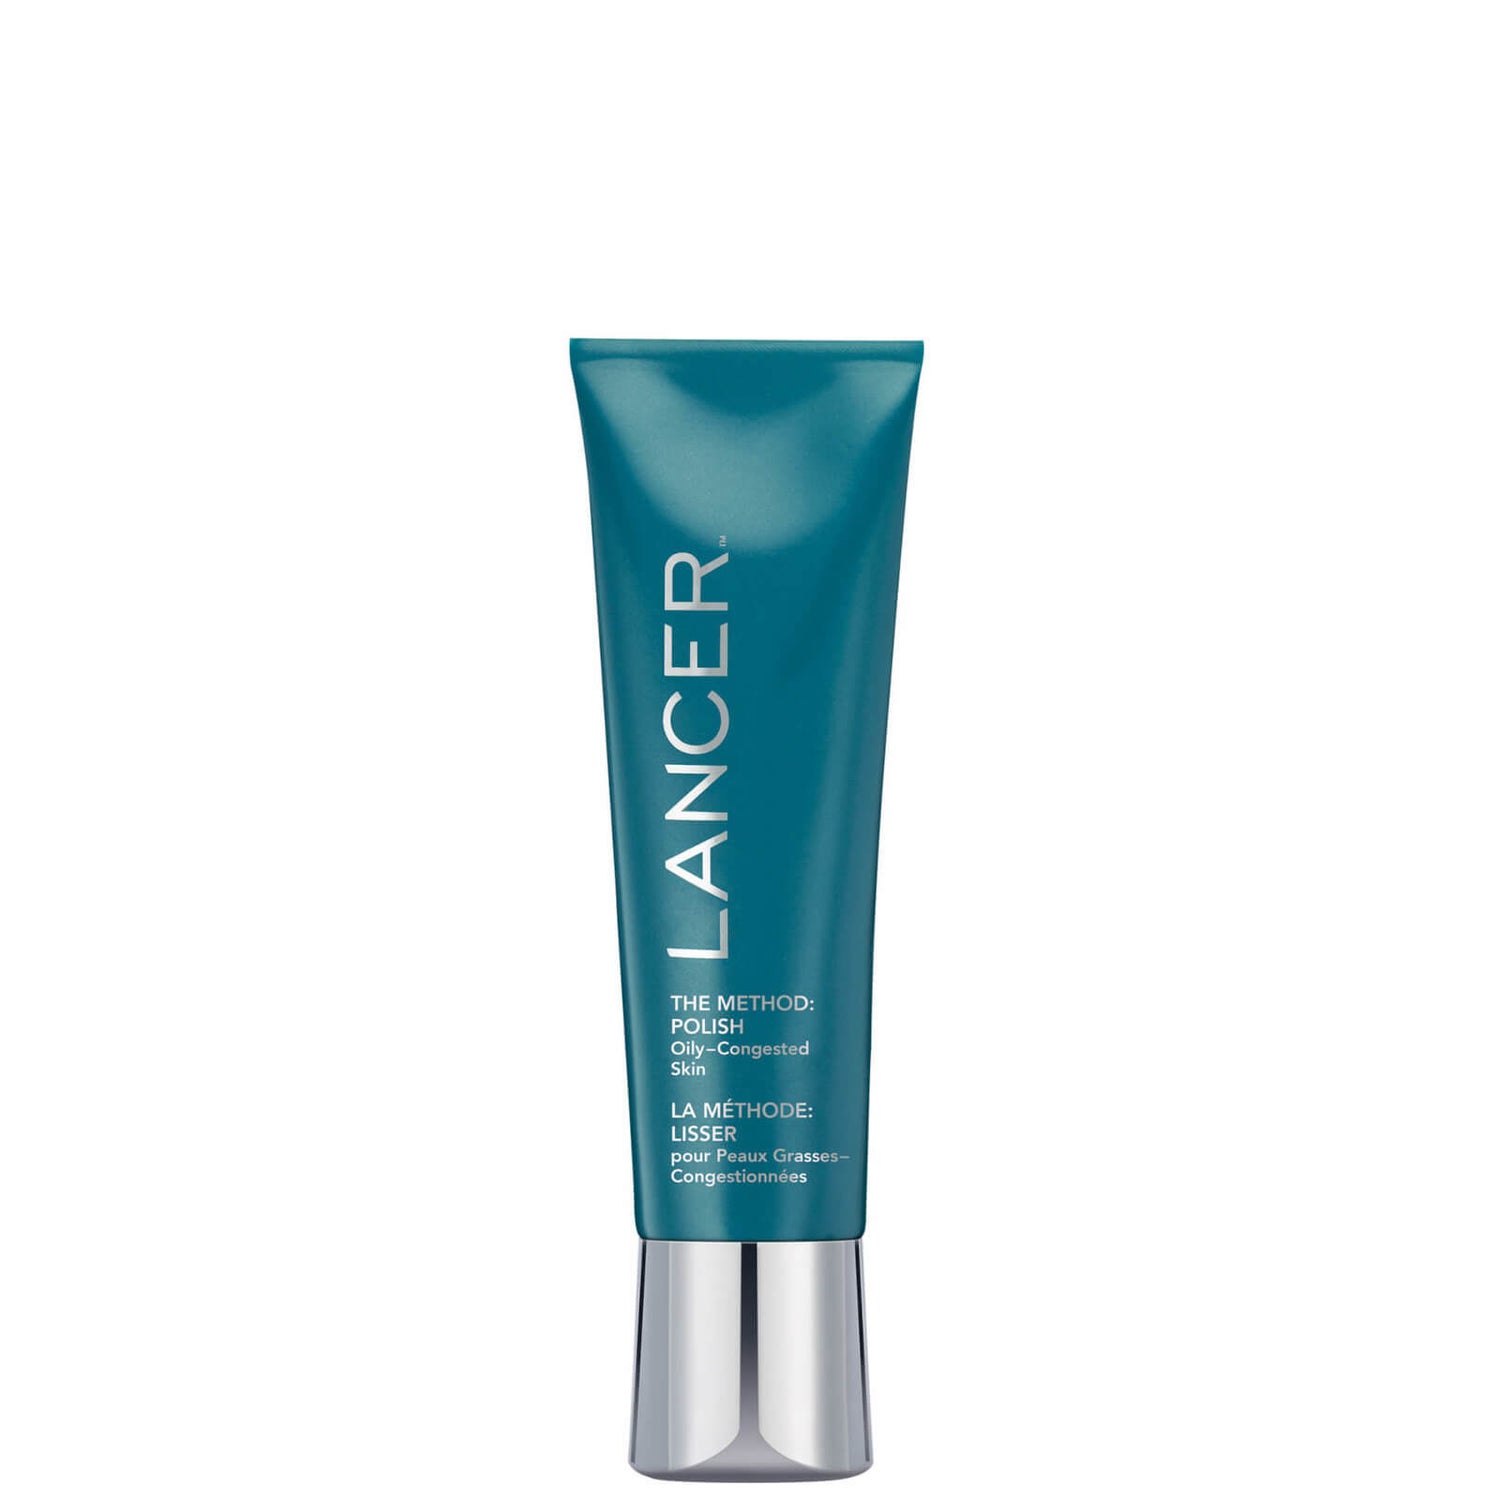 Lancer Skincare The Method: Polish Oily-Congested Skin (4.2 fl. oz.)